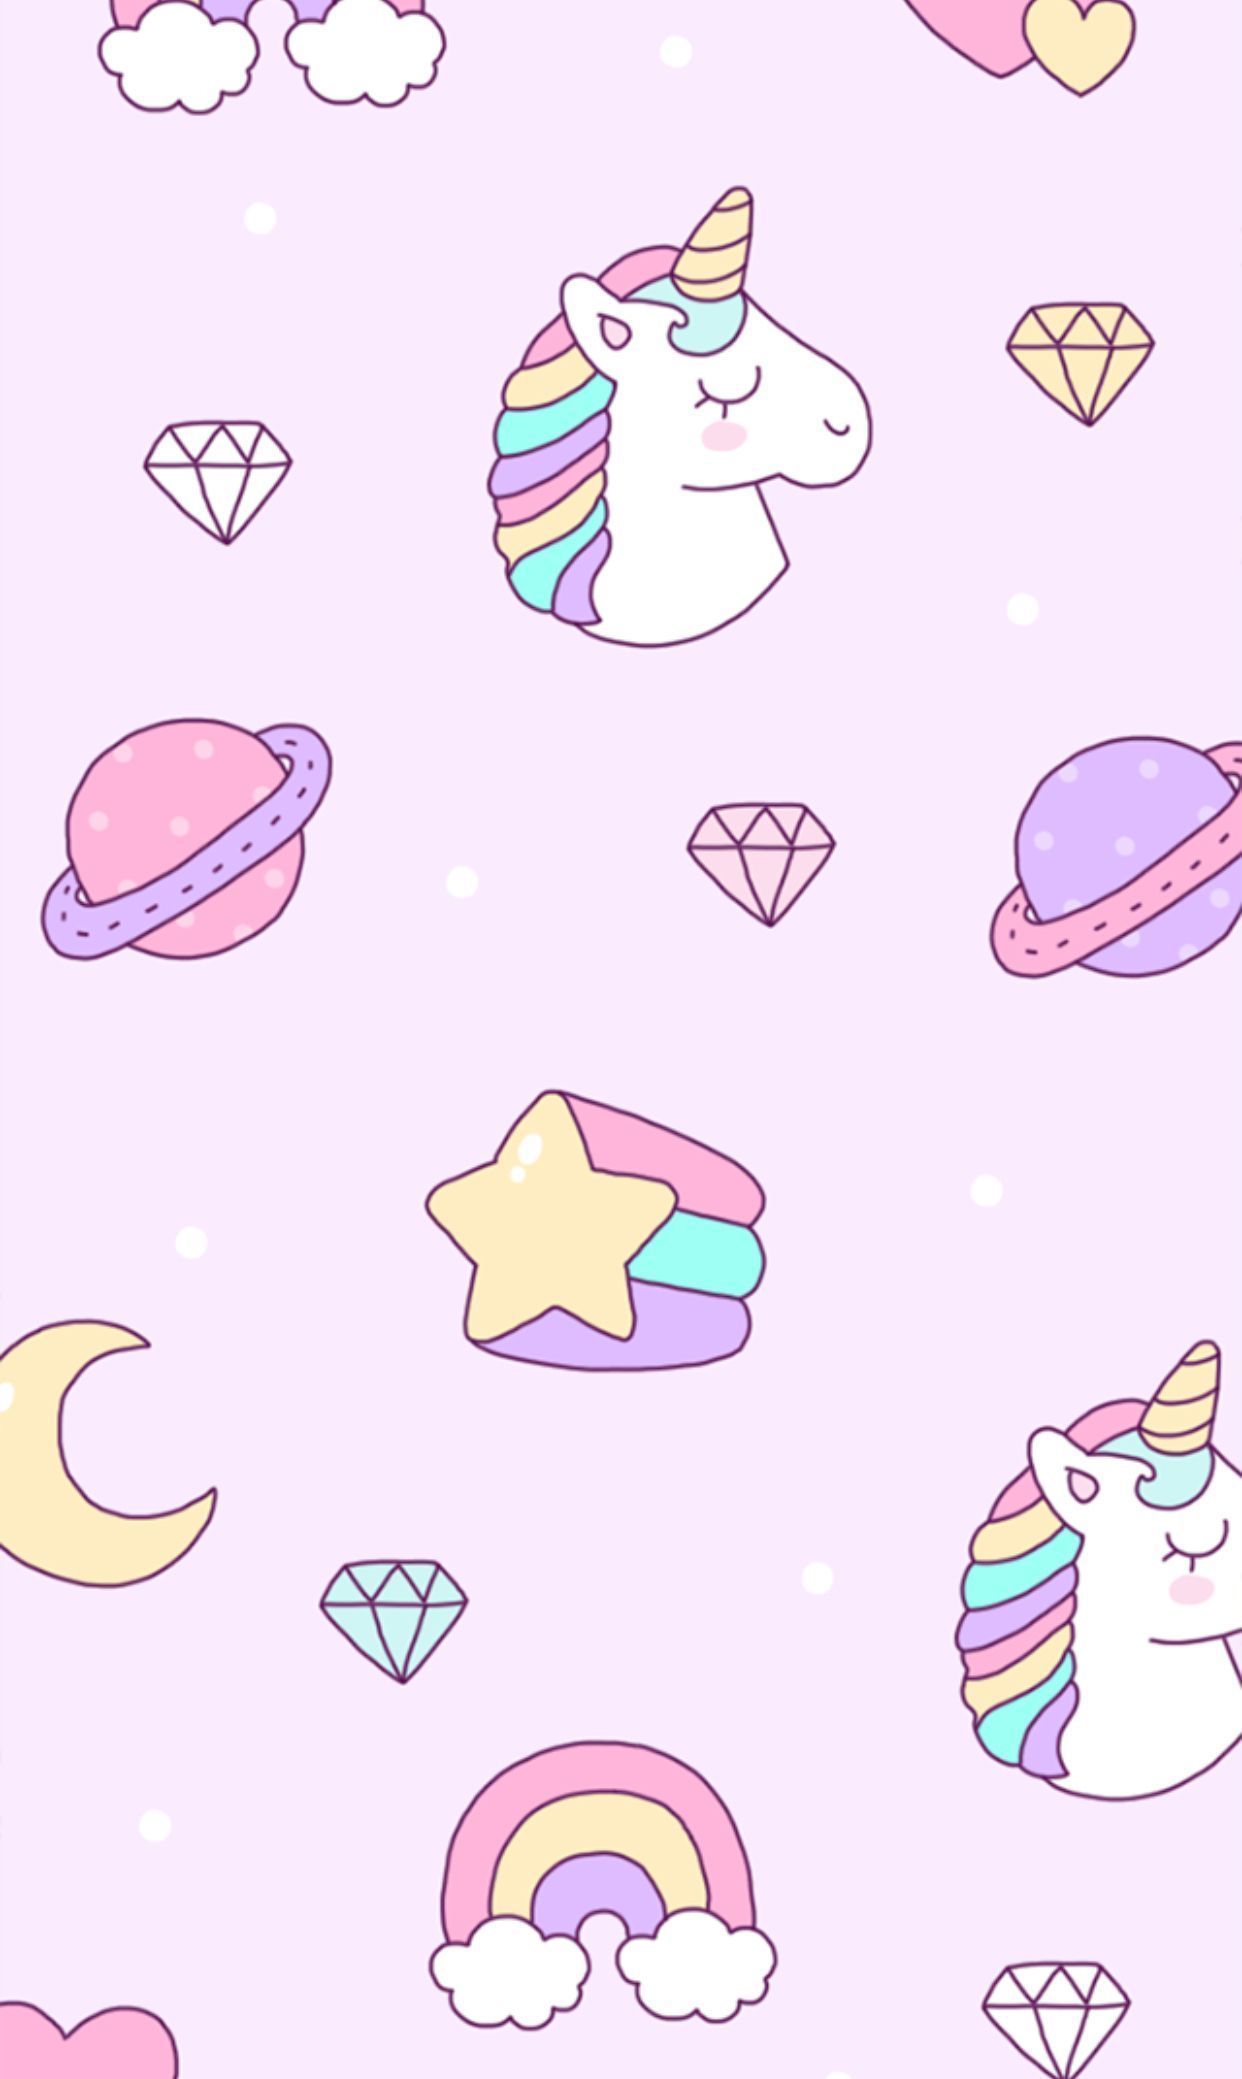 A cute unicorn pattern with stars and hearts - Unicorn